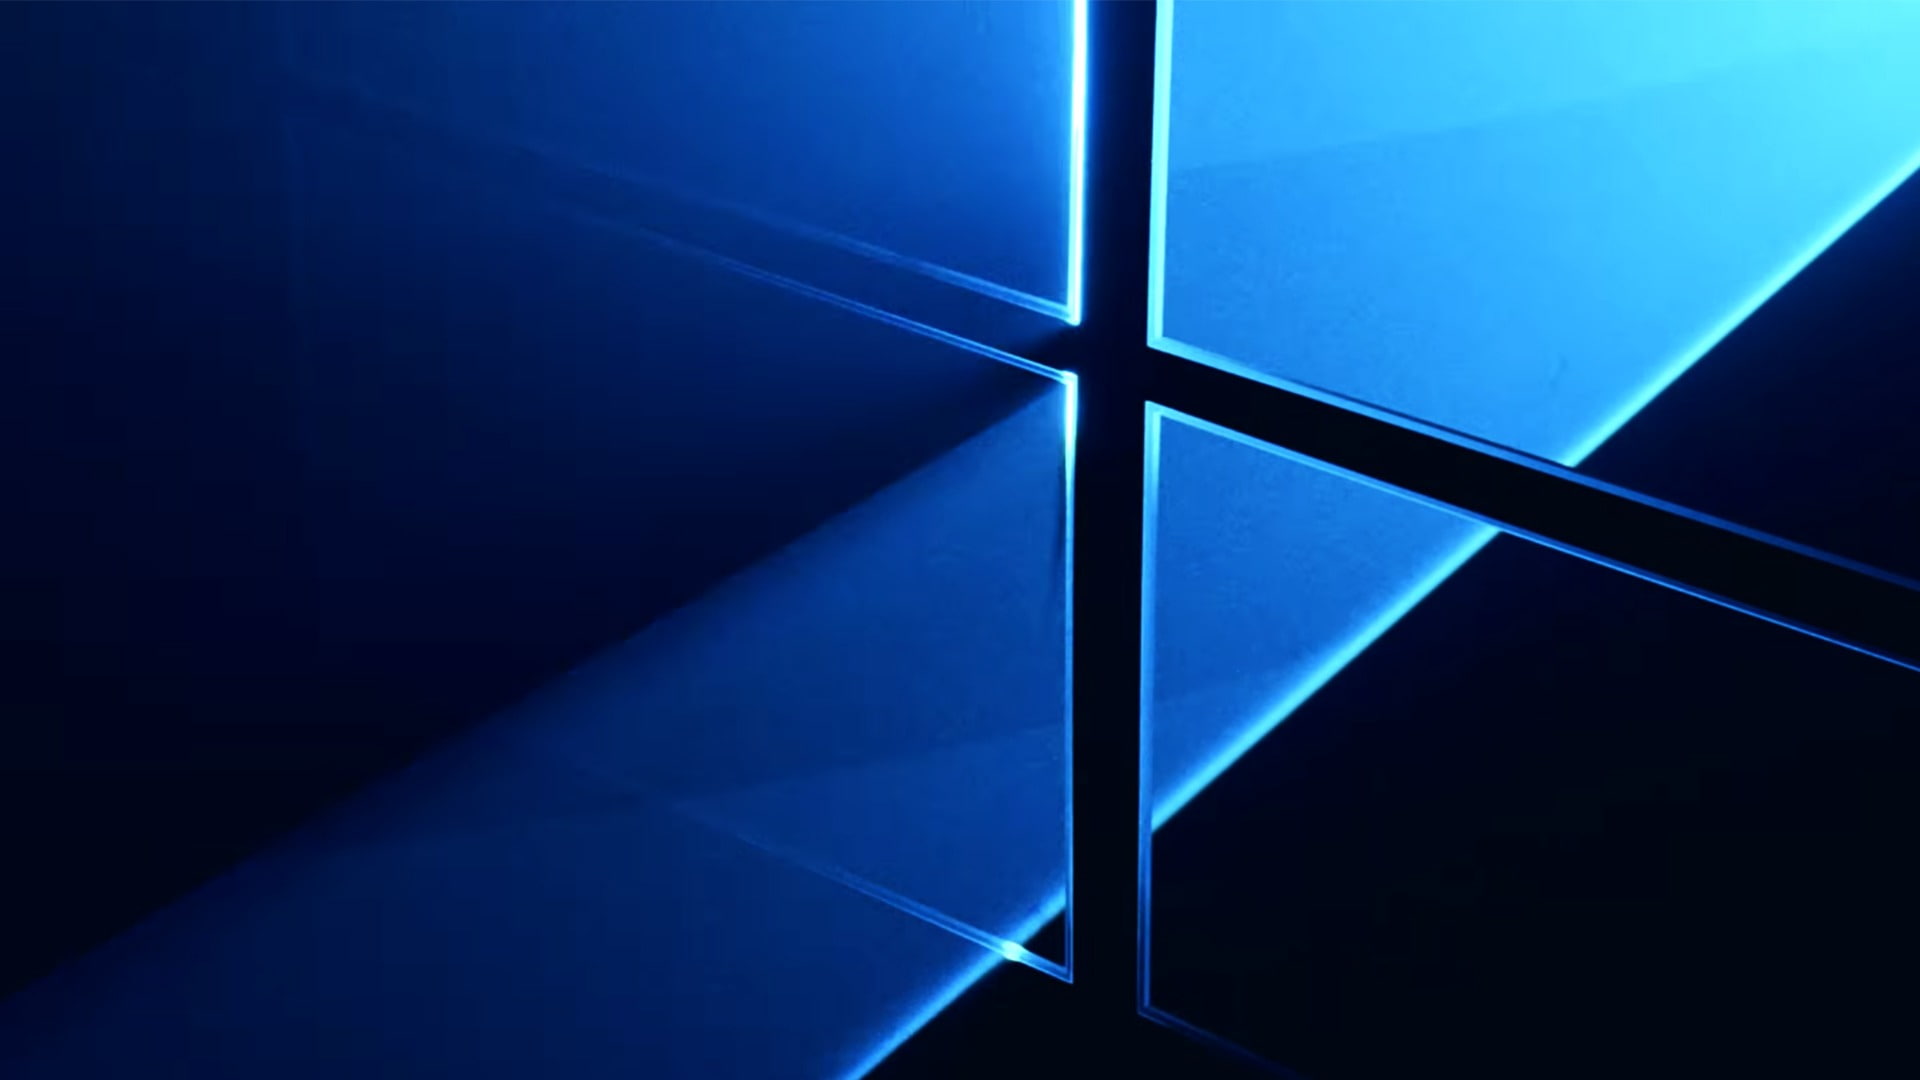 Microsoft Windows 10 Desktop Wallpaper 12, W, blue, shape, abstract